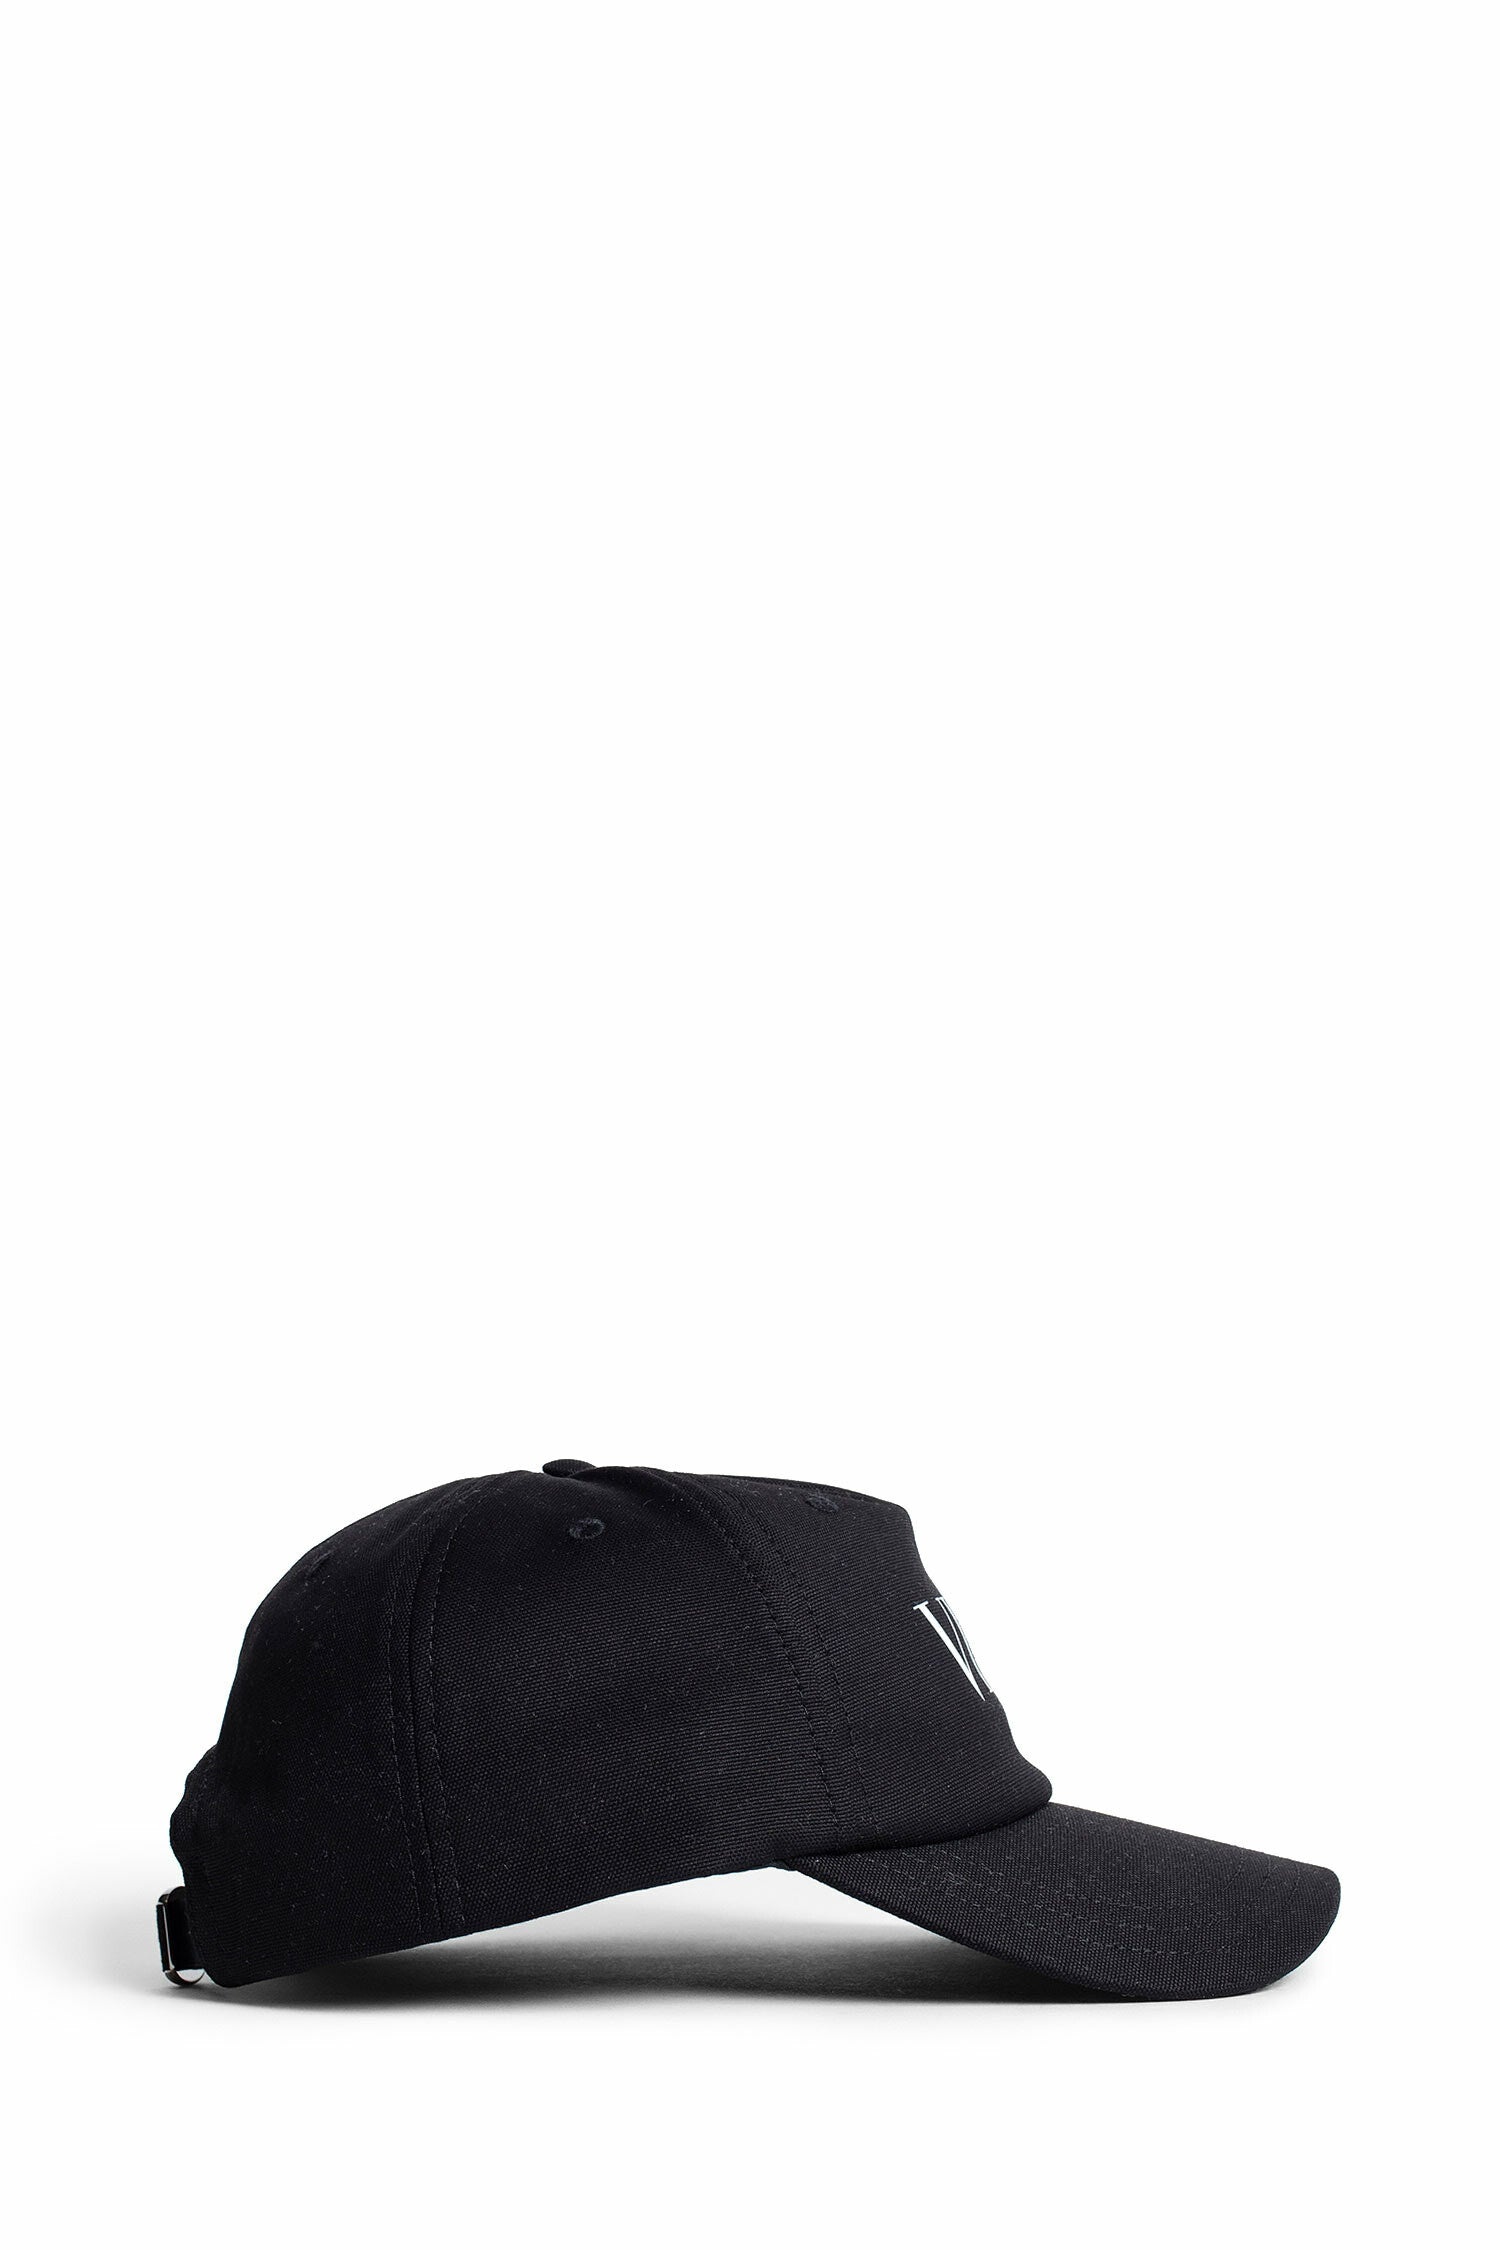 VALENTINO MAN BLACK HATS - 2